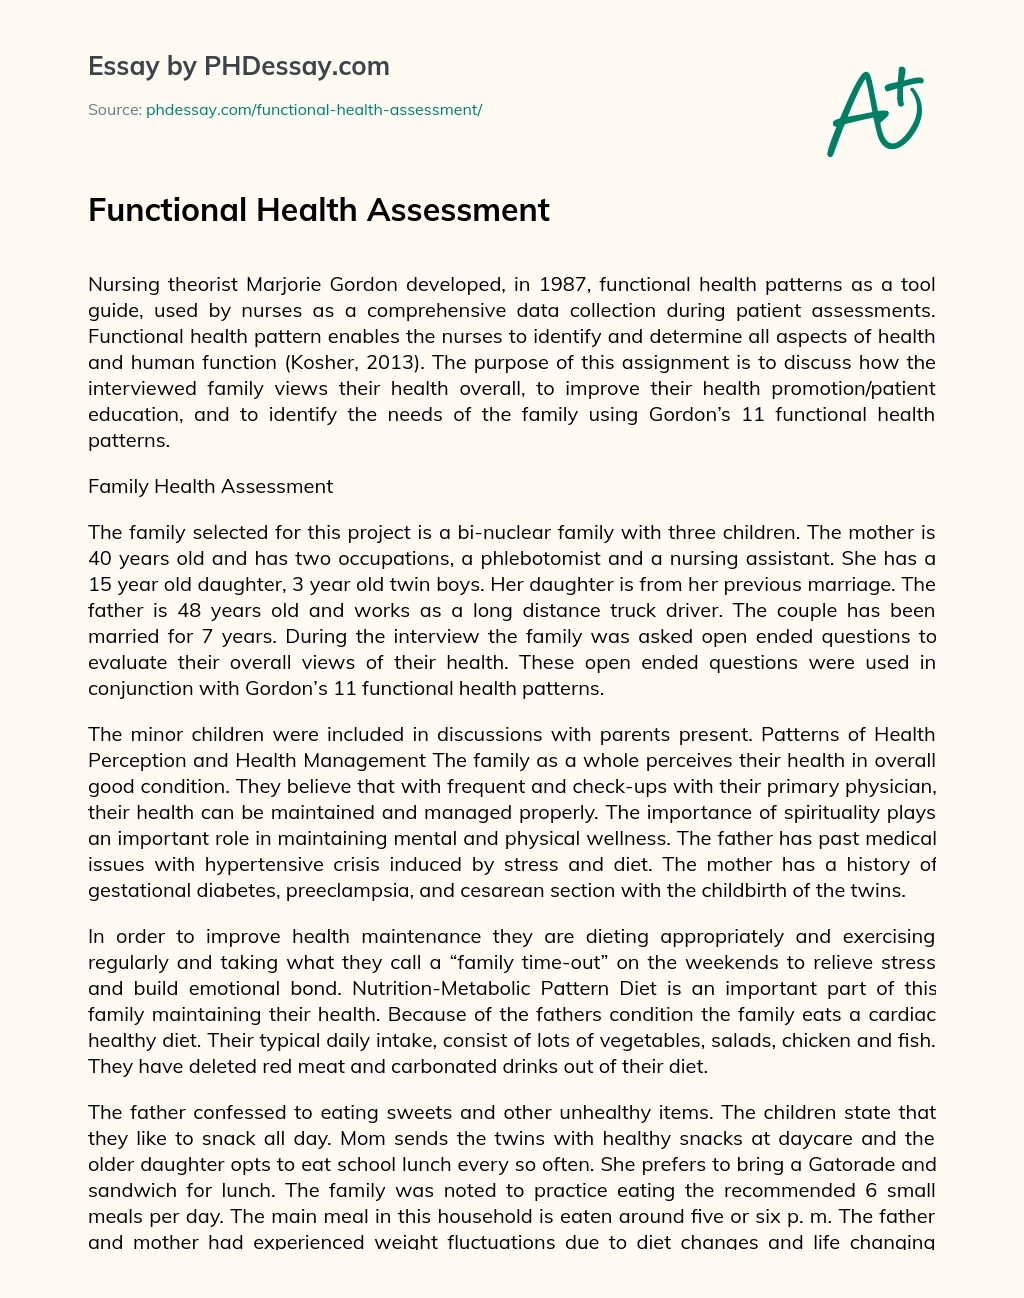 Functional Health Assessment essay